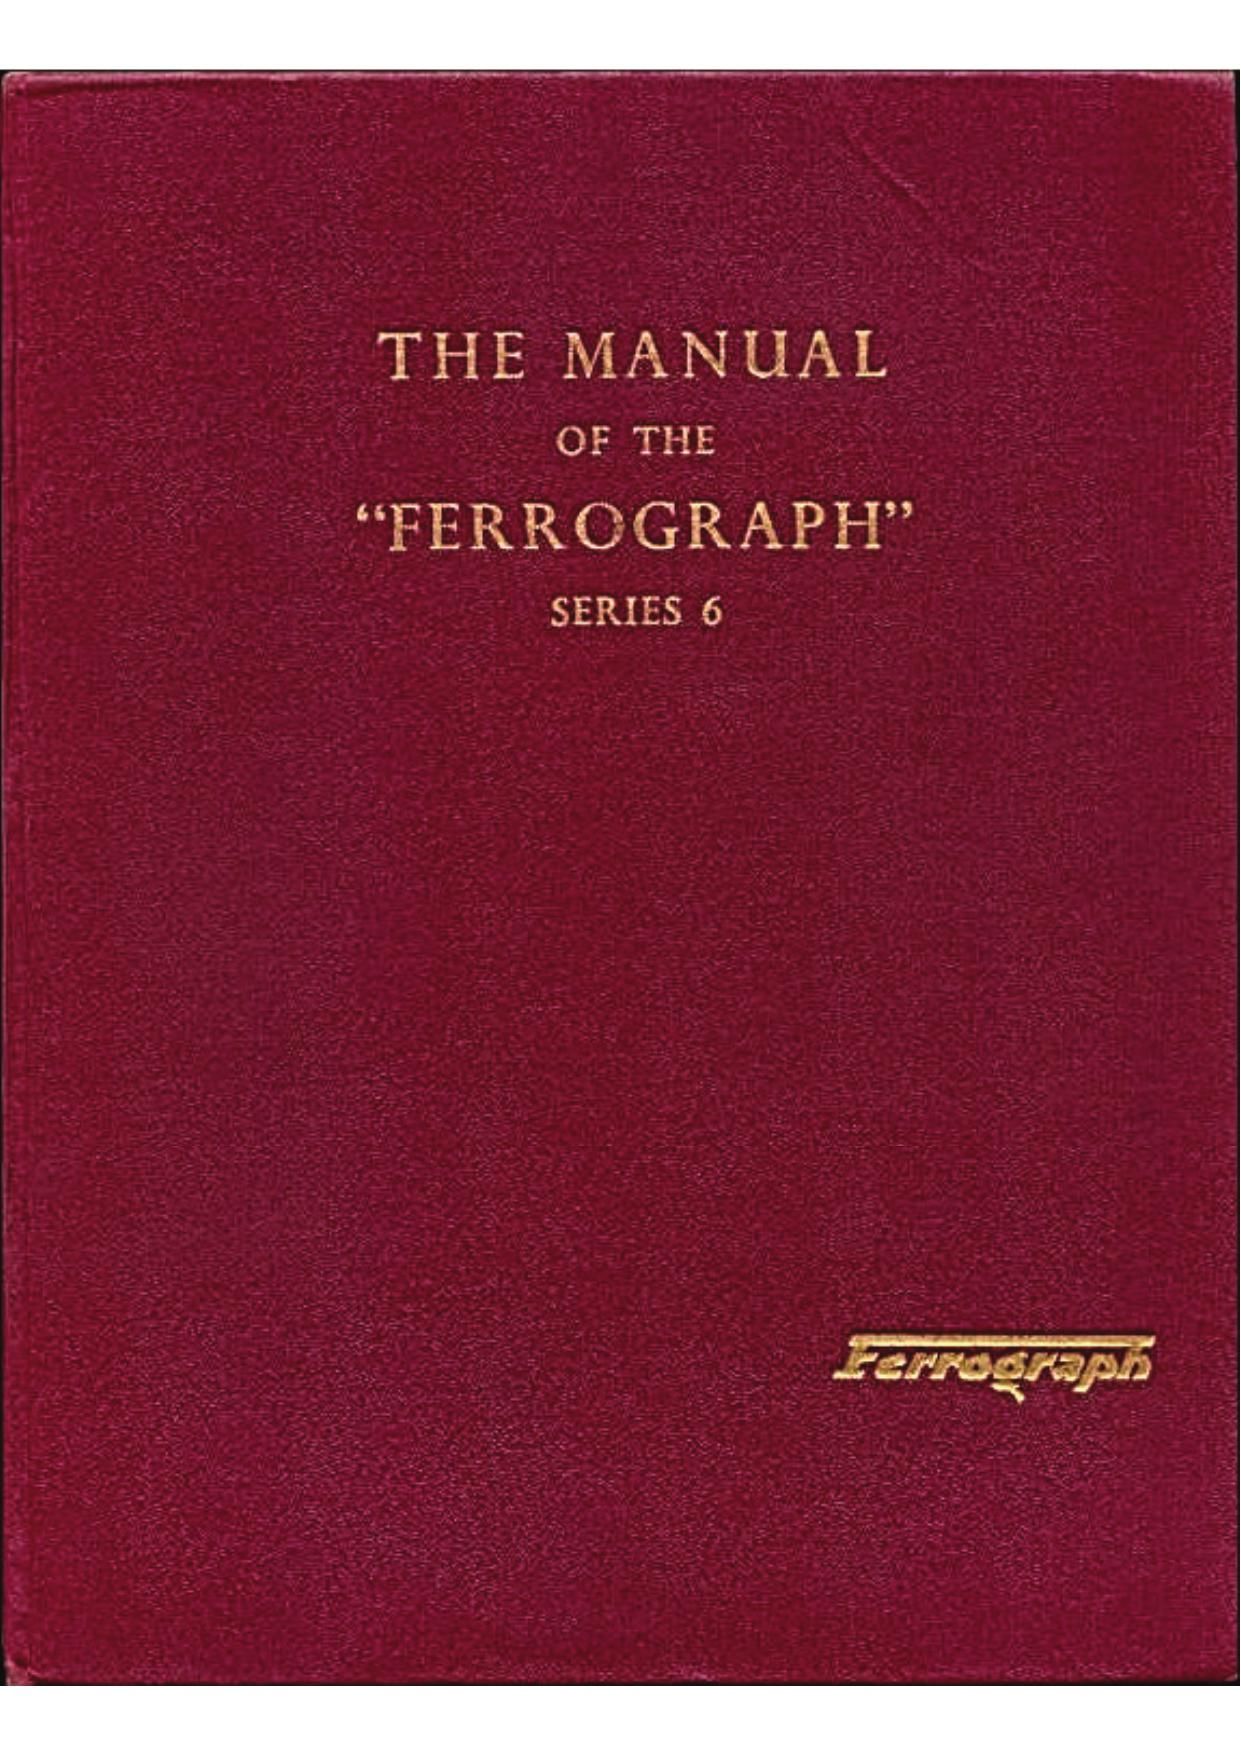 Ferrograph 632 Service Manual